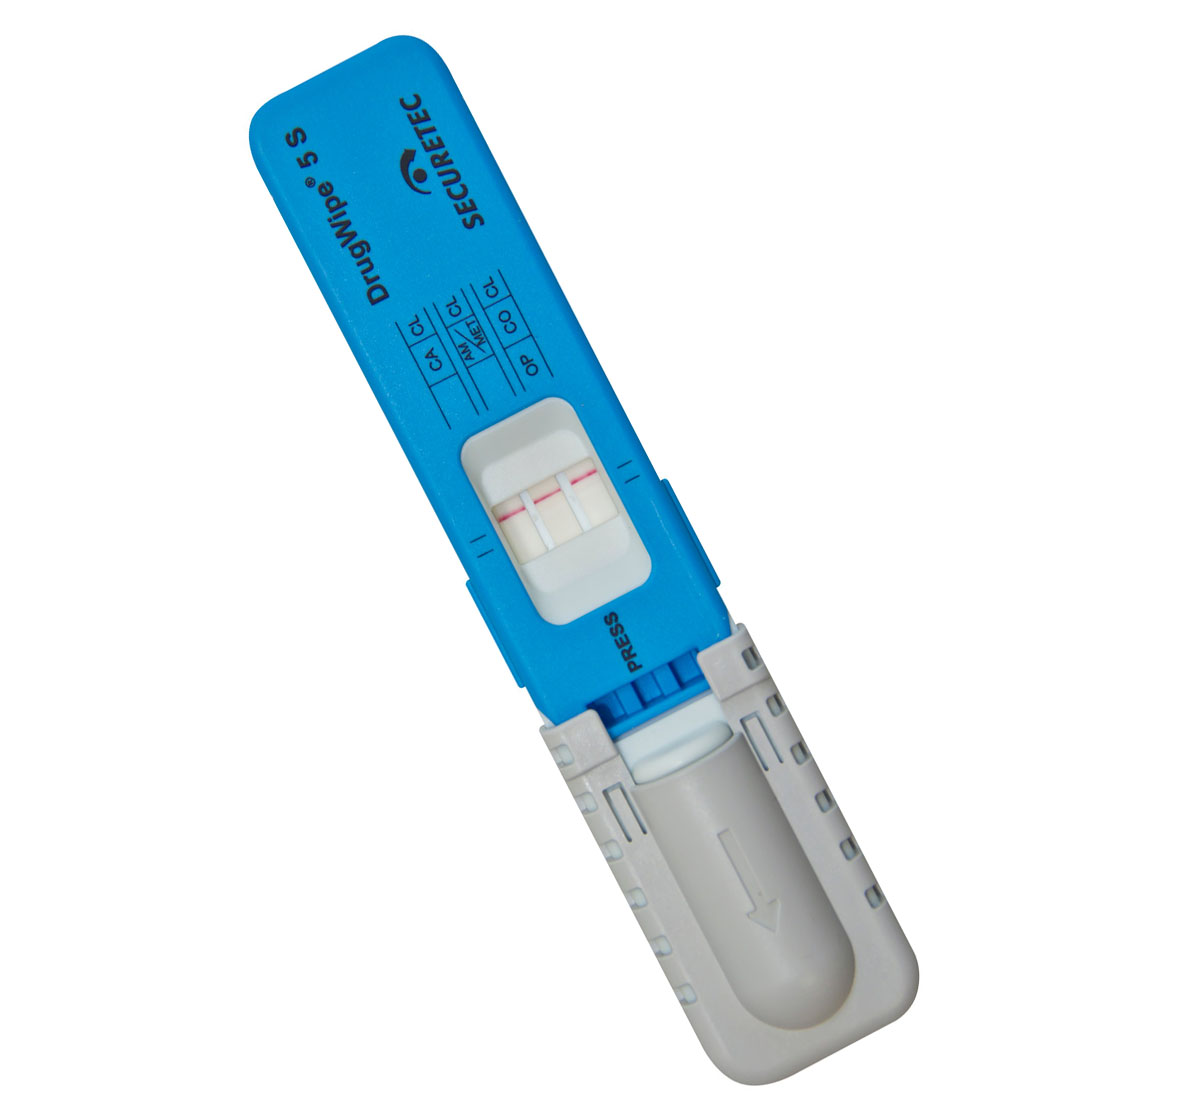 Blue Saliva Drug Test kit for the detection of Amphetamines, Methamphetamines, Cocaine